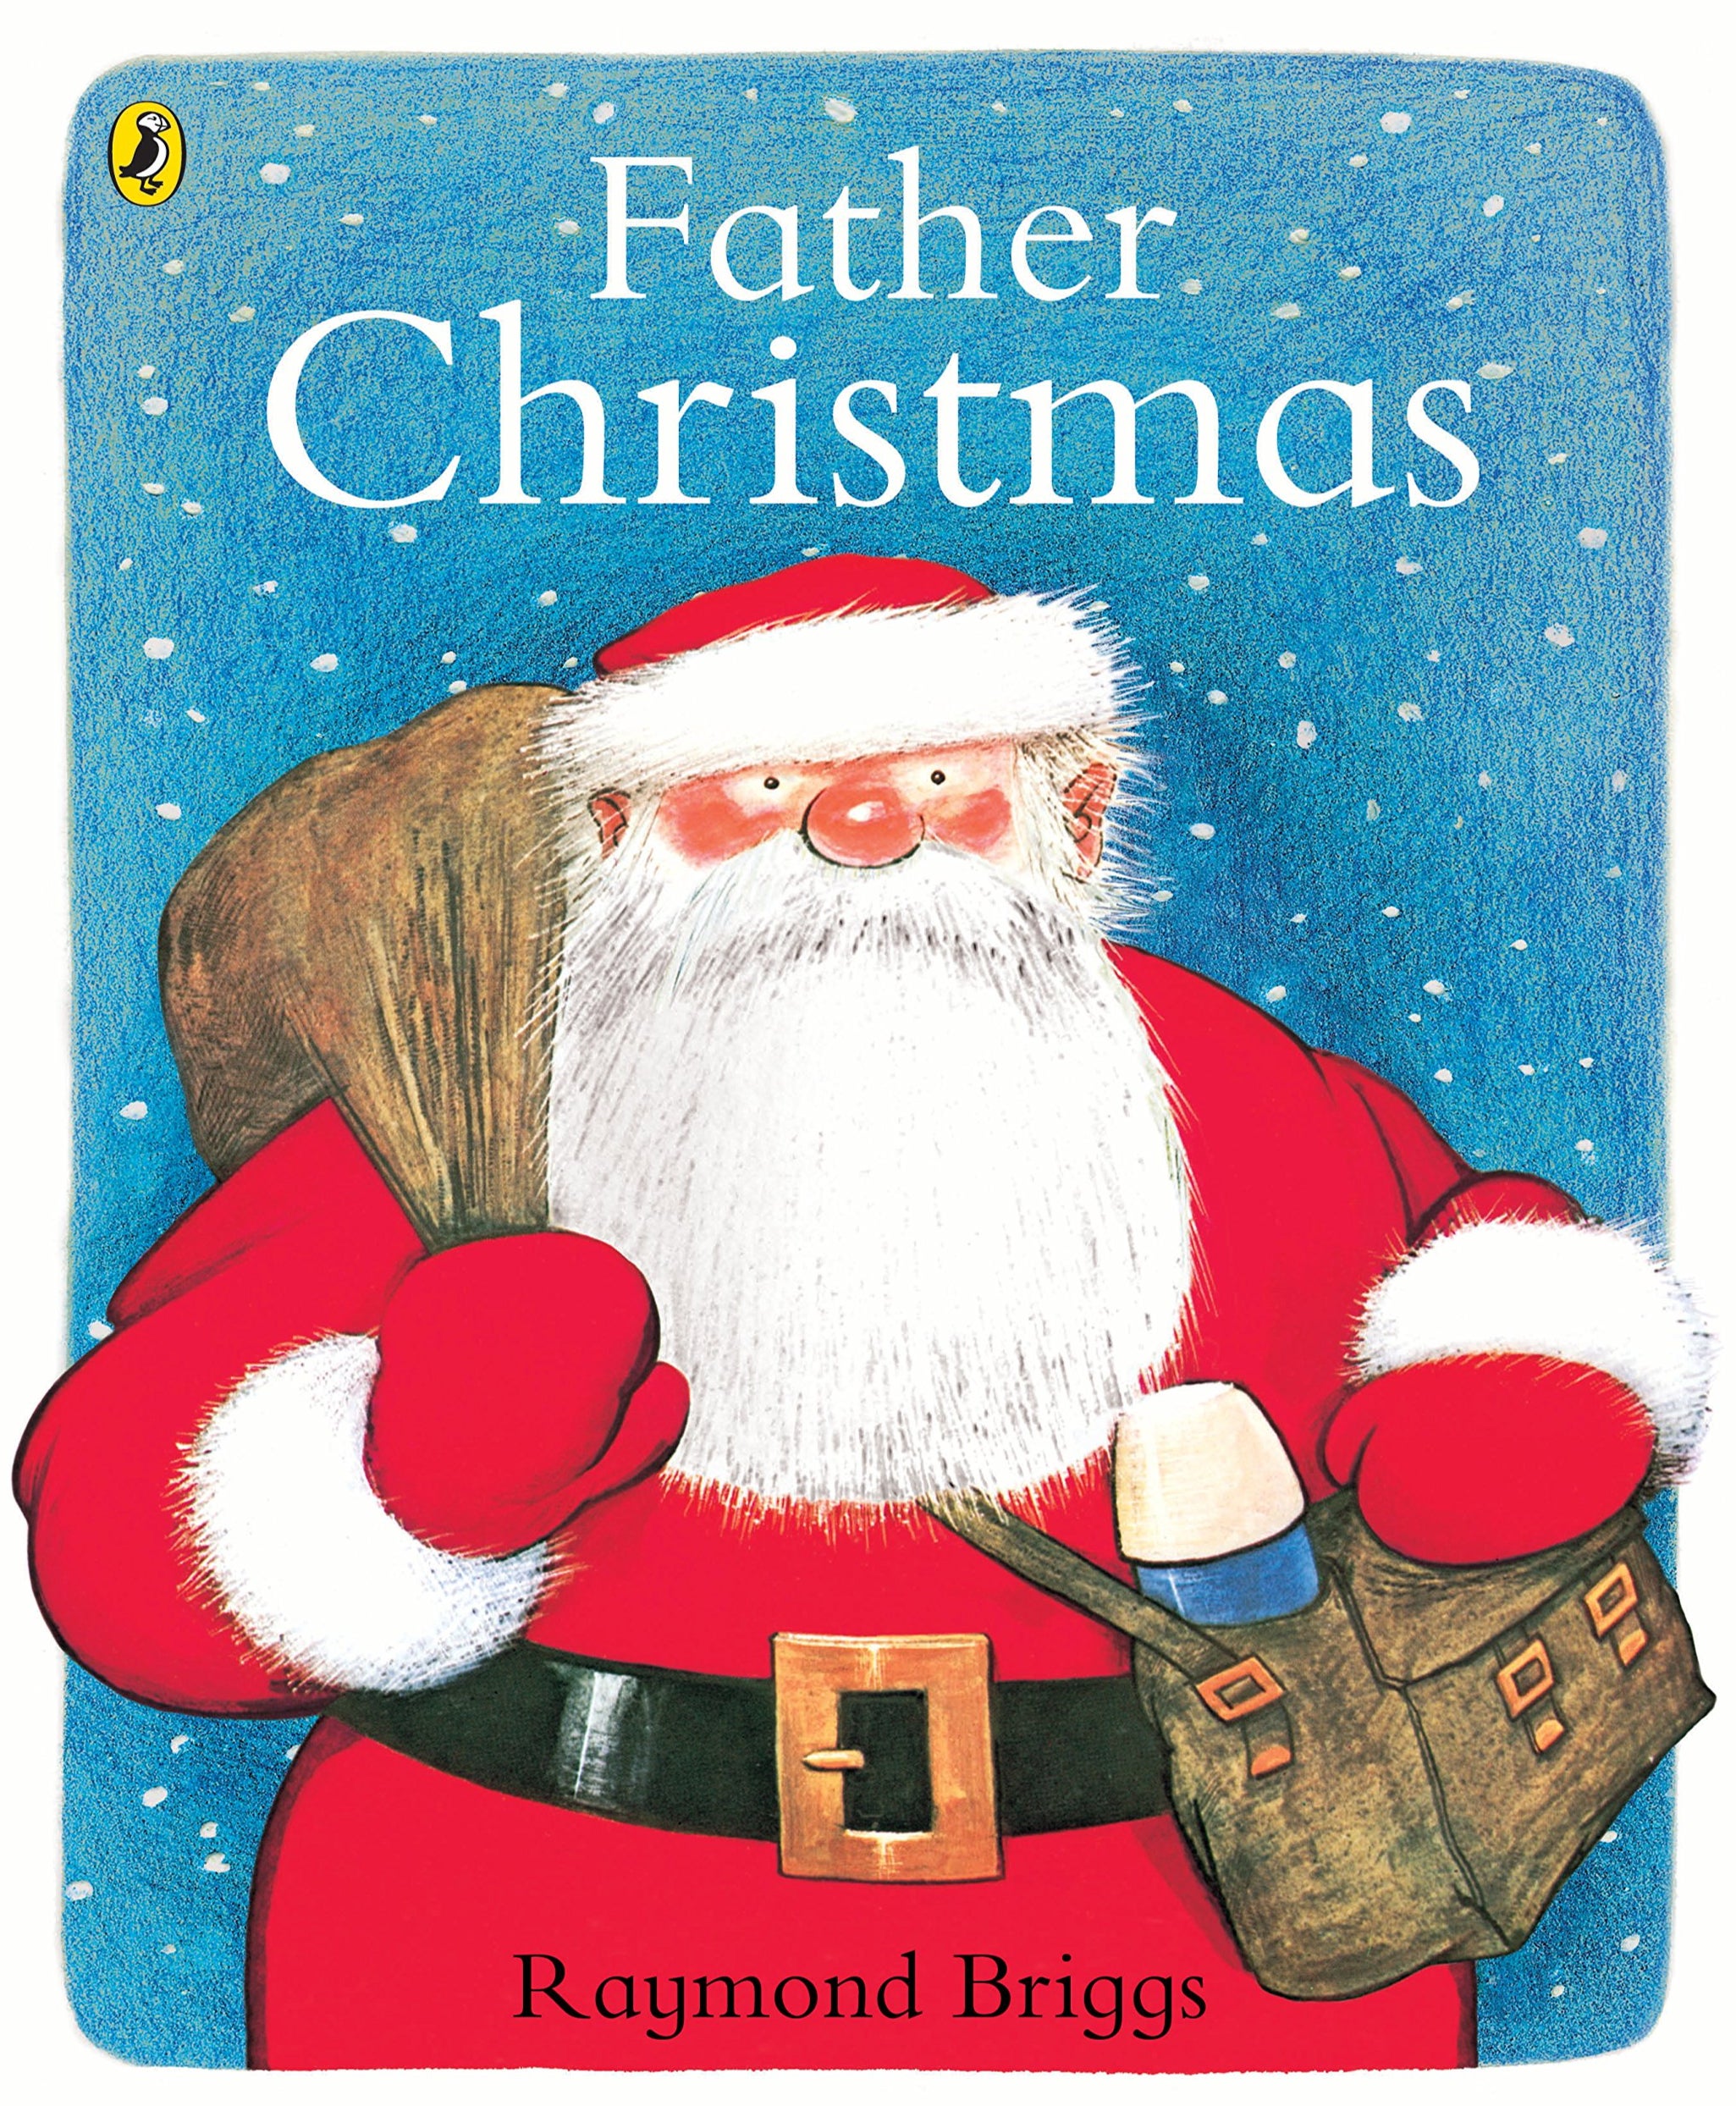 ‘Father Christmas’ won the Kate Greenaway Medal